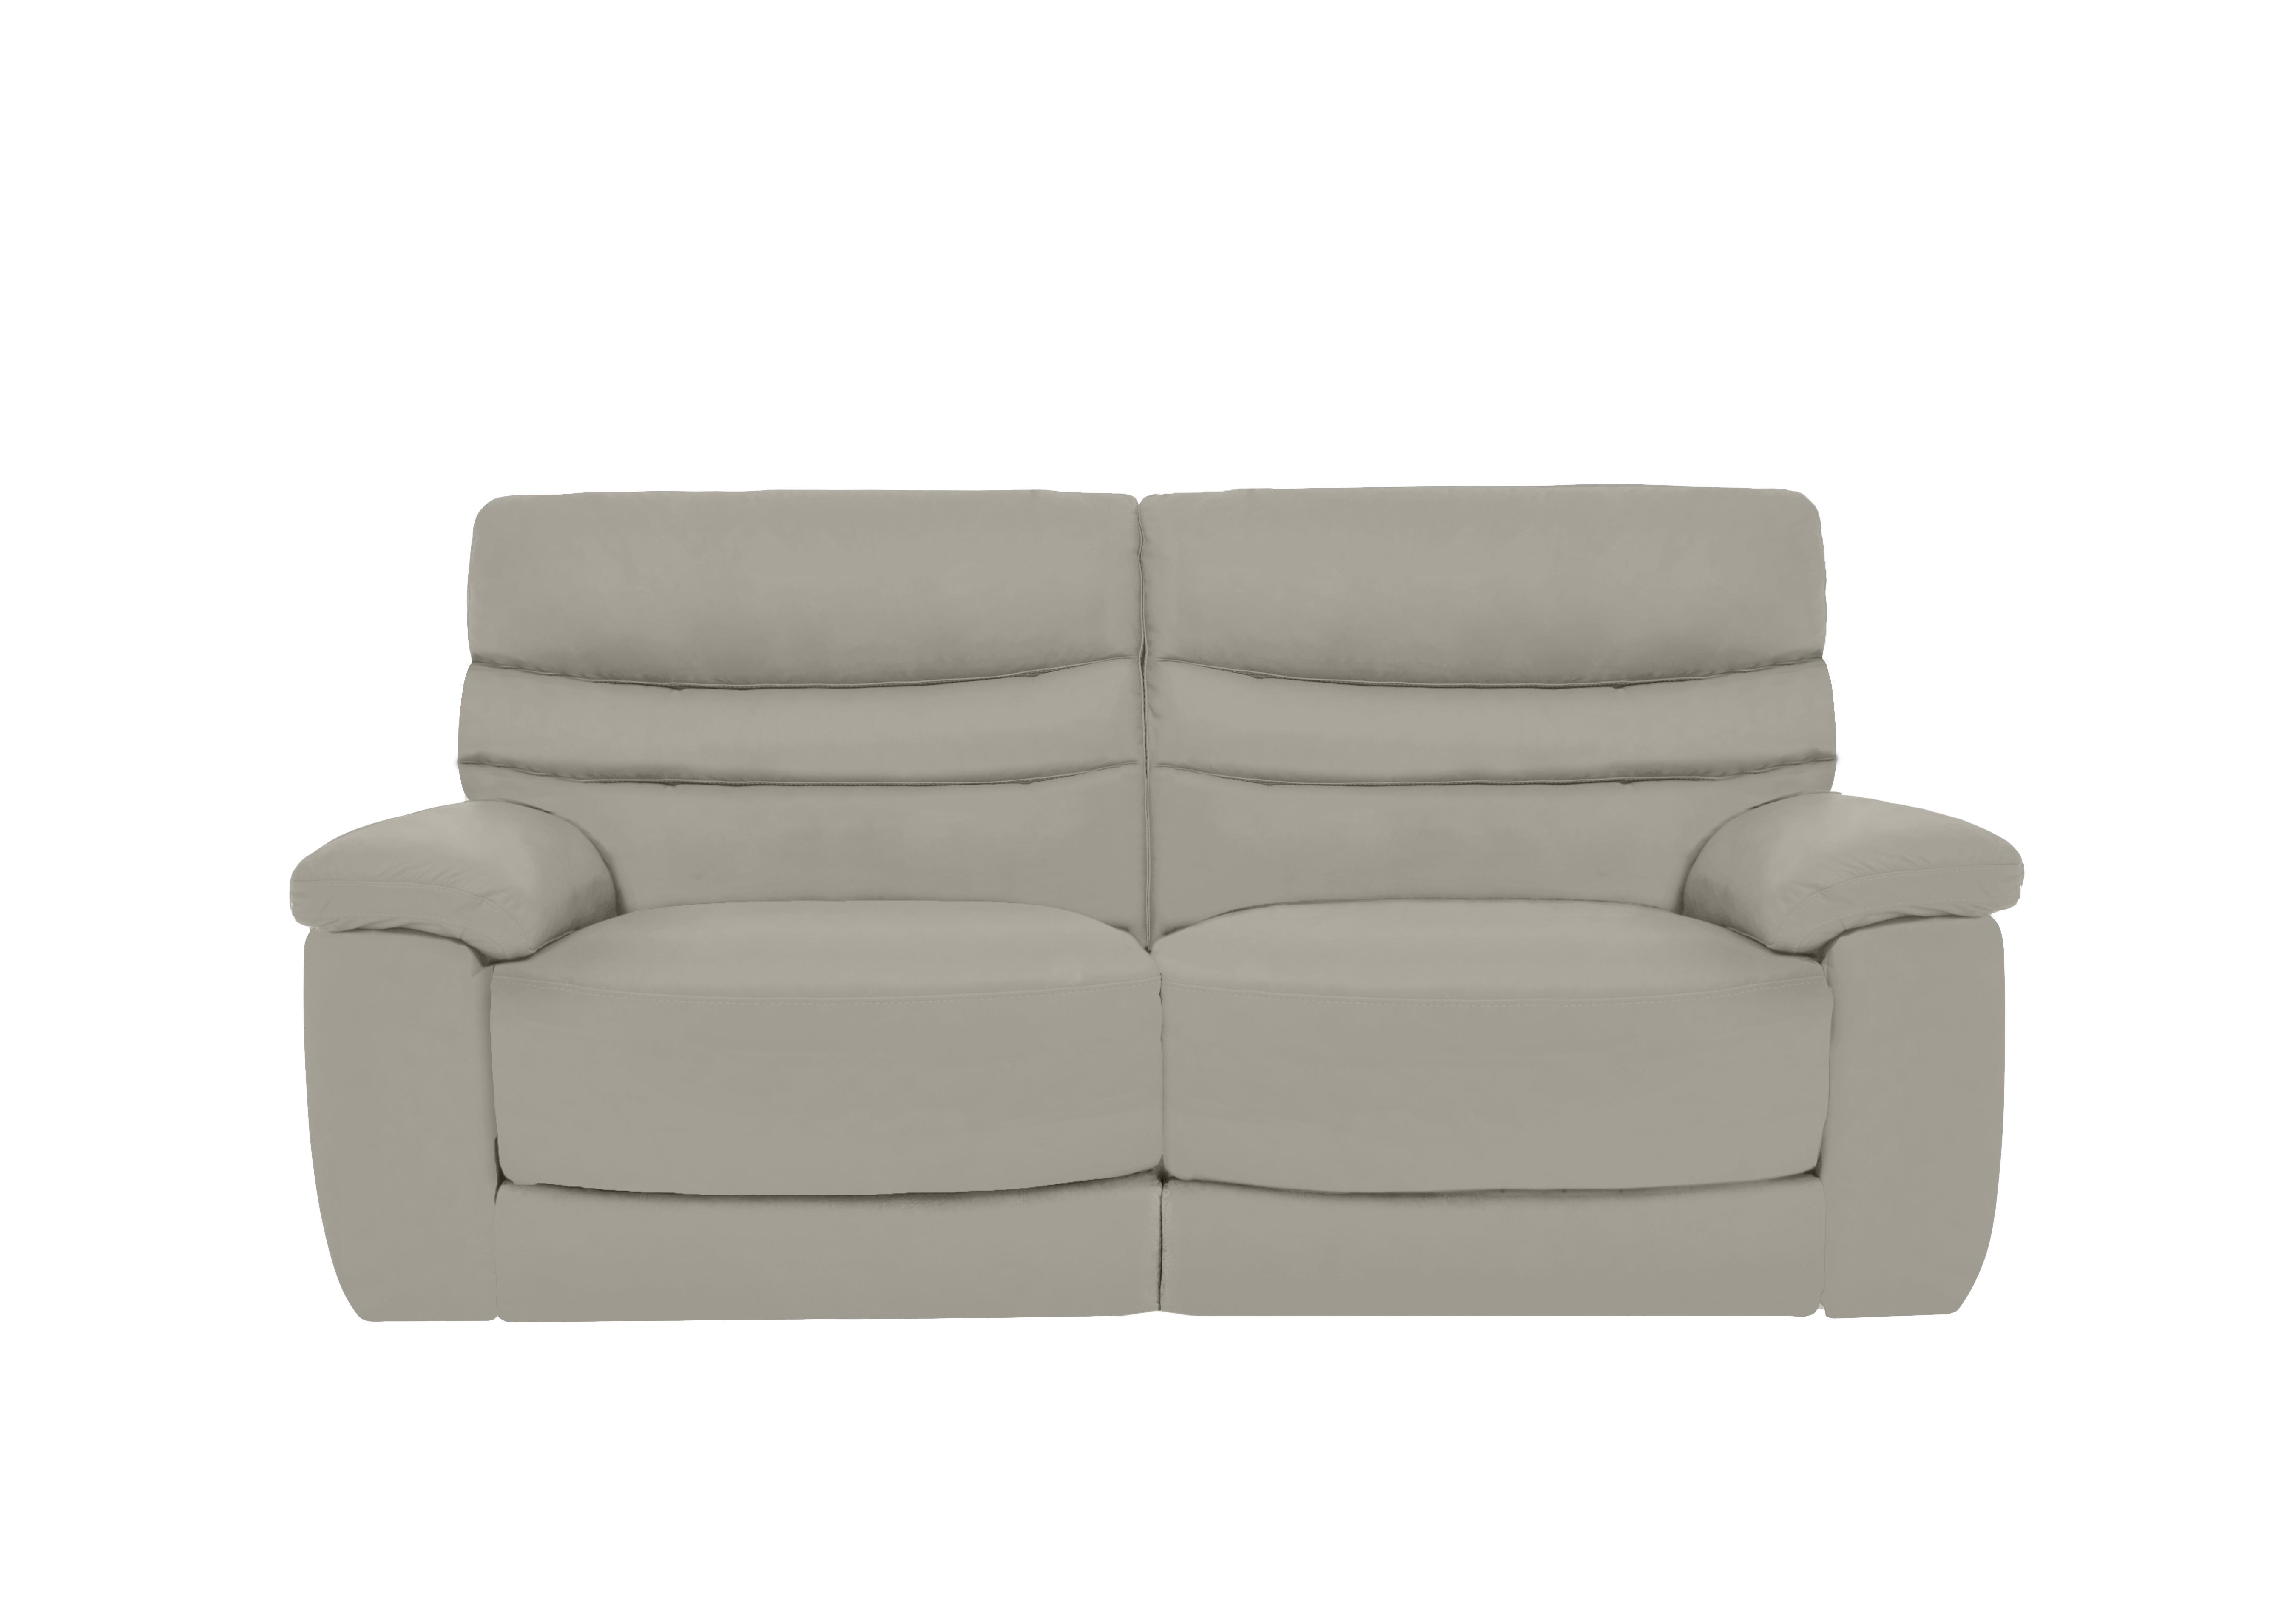 Nimbus 3 Seater Leather Sofa in Bx-251e Grey on Furniture Village